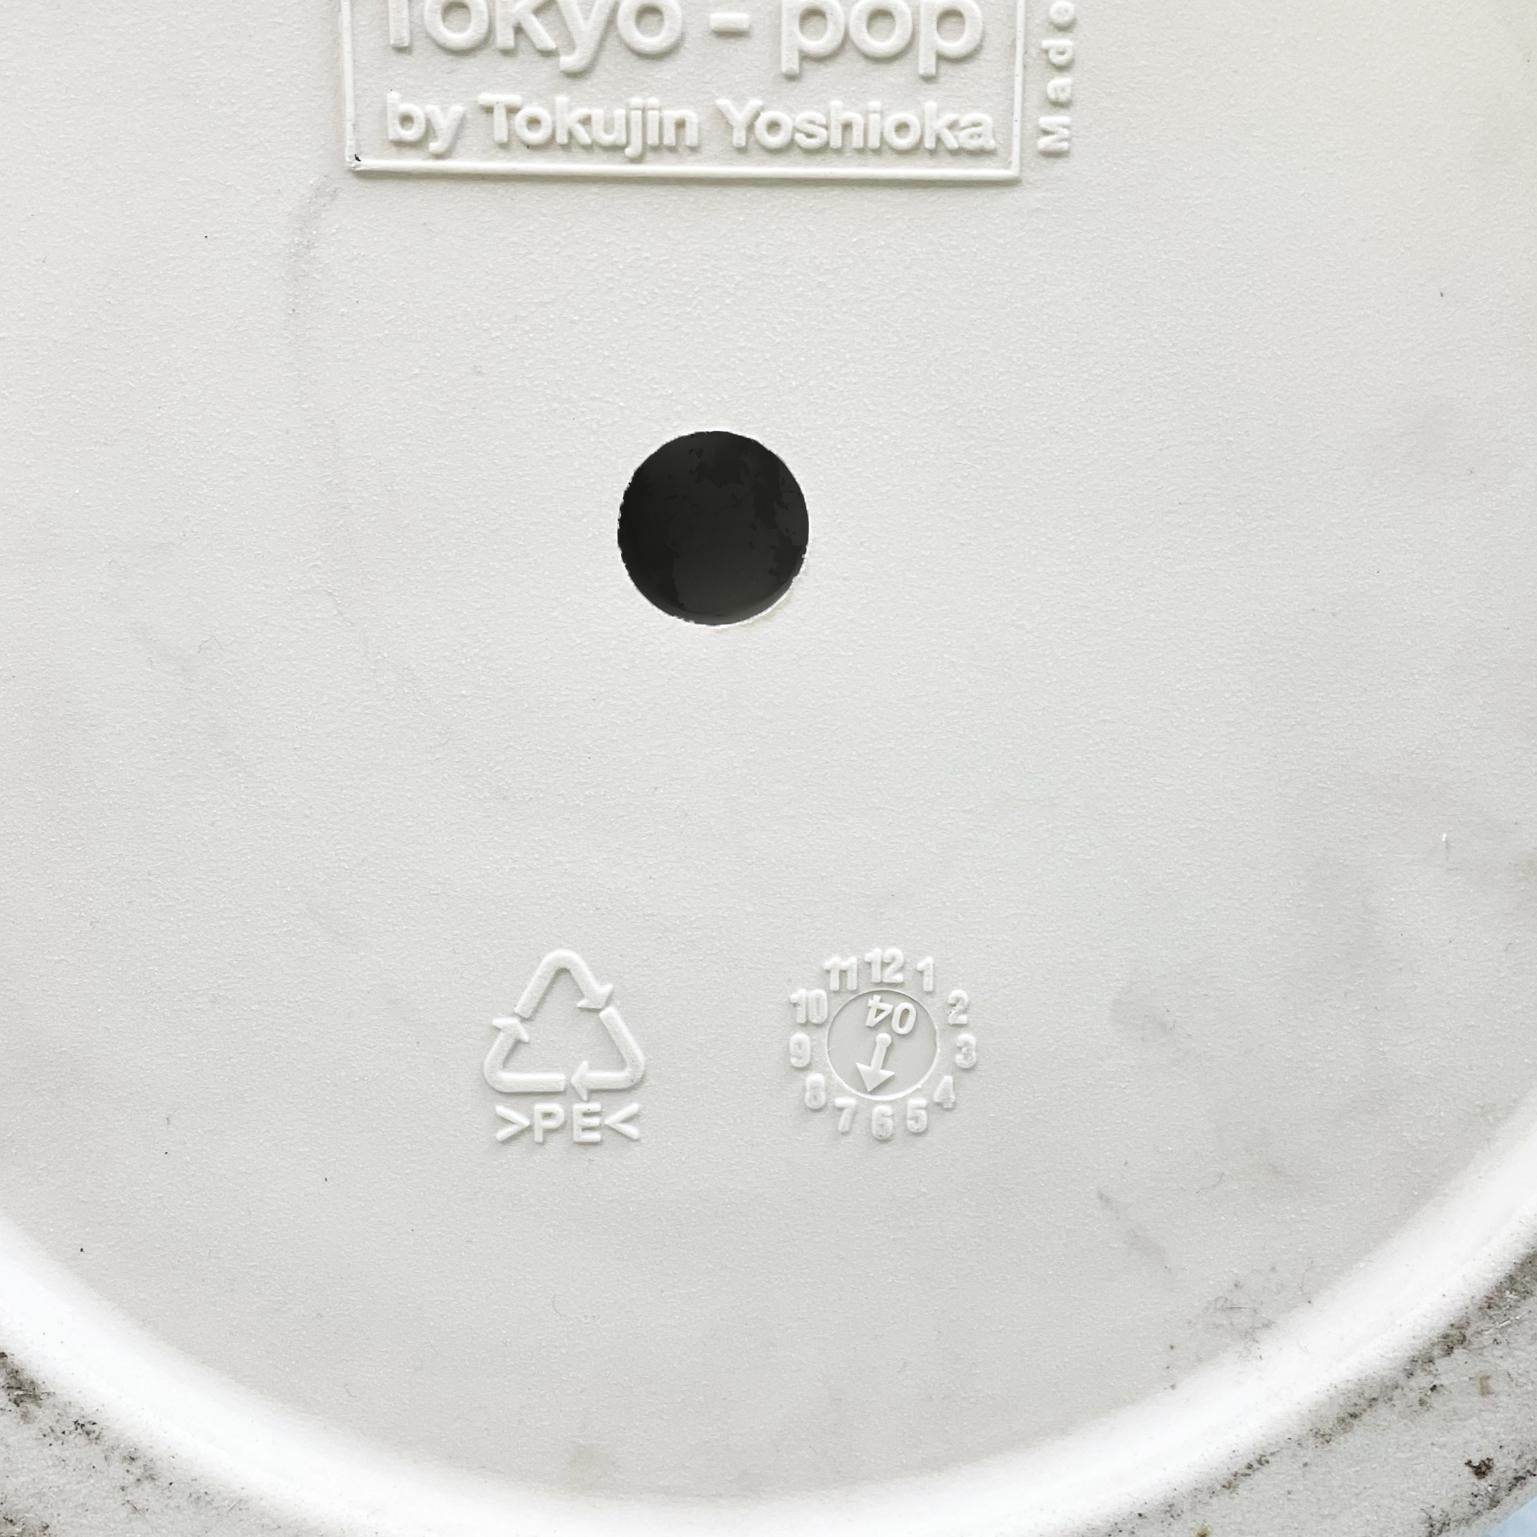 Tabouret italien post-moderne en plastique blanc Tokyo Pop de Yoshioka Driade, années 2000 en vente 8